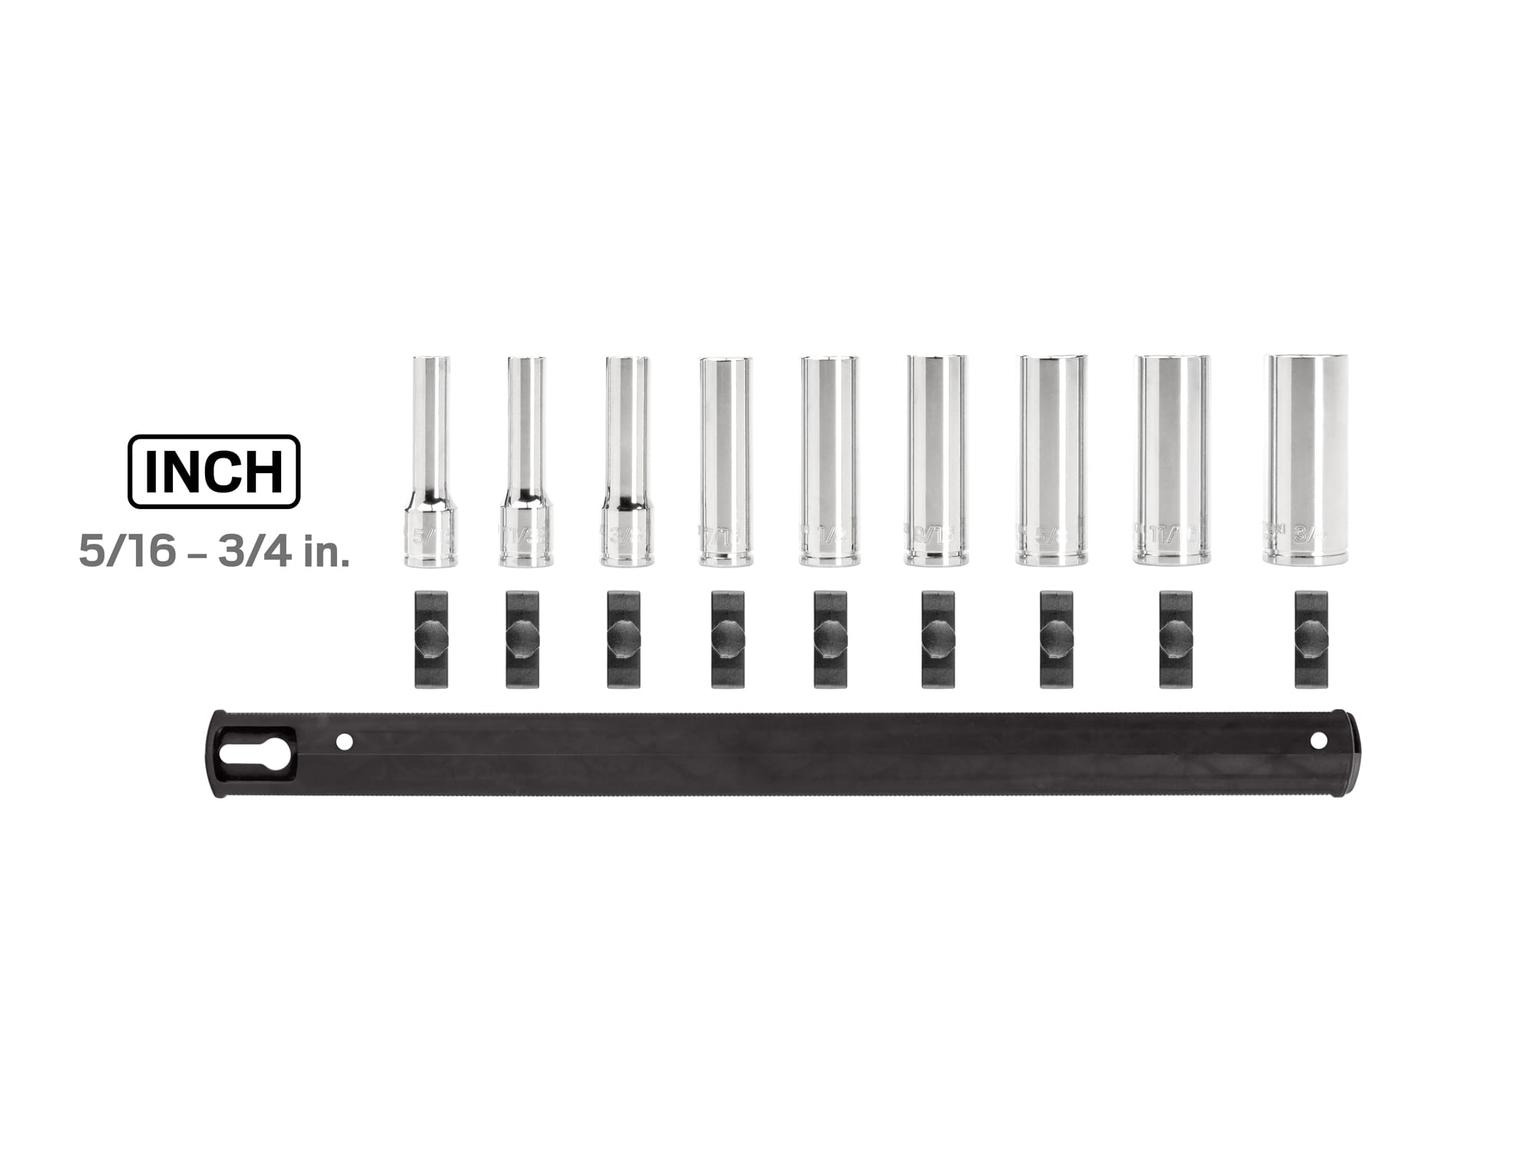 TEKTON SHD91105-T 3/8 Inch Drive Deep 6-Point Socket Set with Rail, 9-Piece (5/16-3/4 in.)